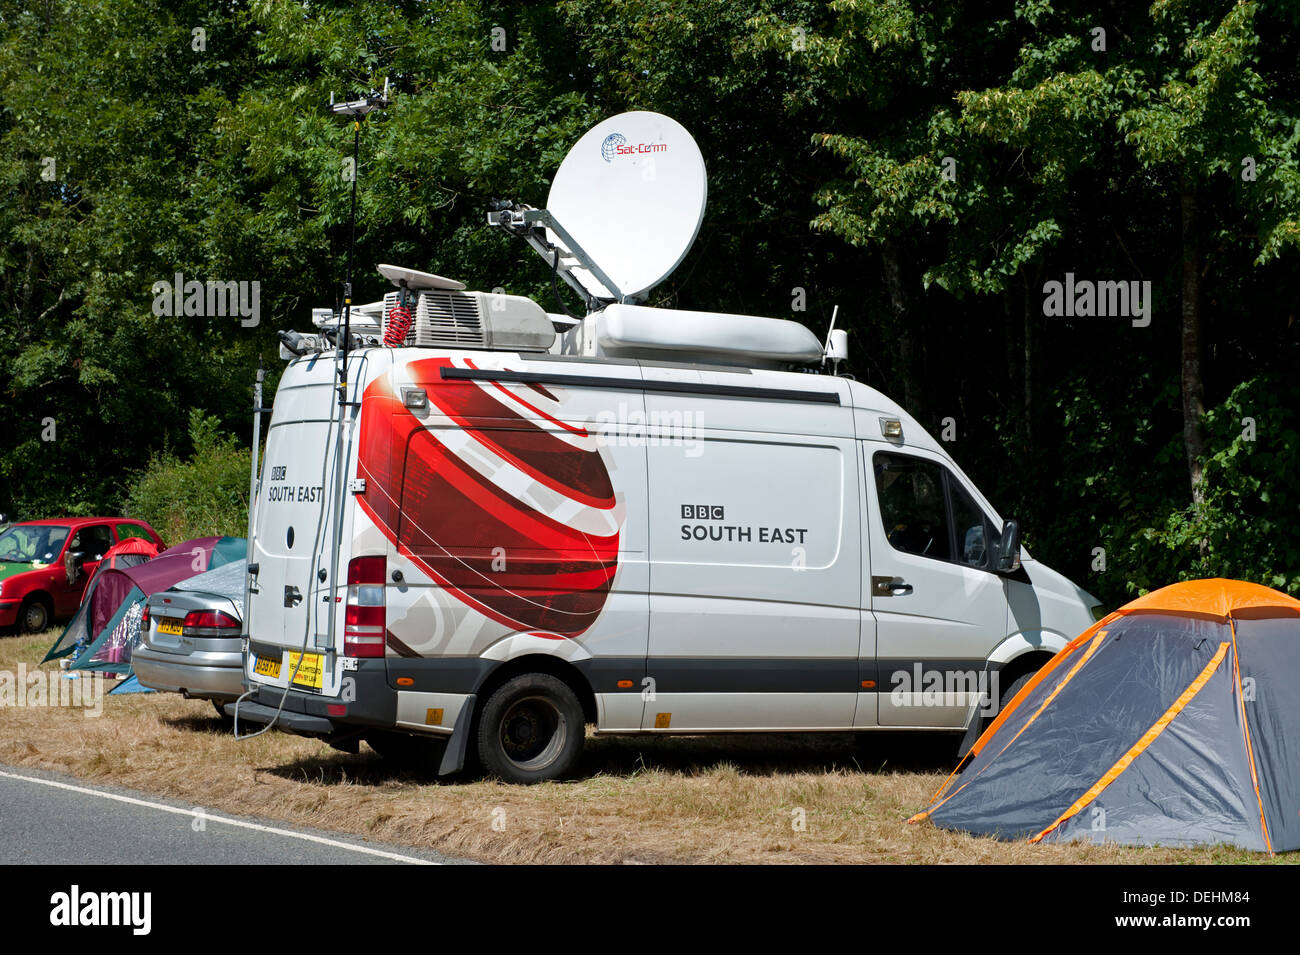 BBC Southeast broadcast van with satellite dish Stock Photo